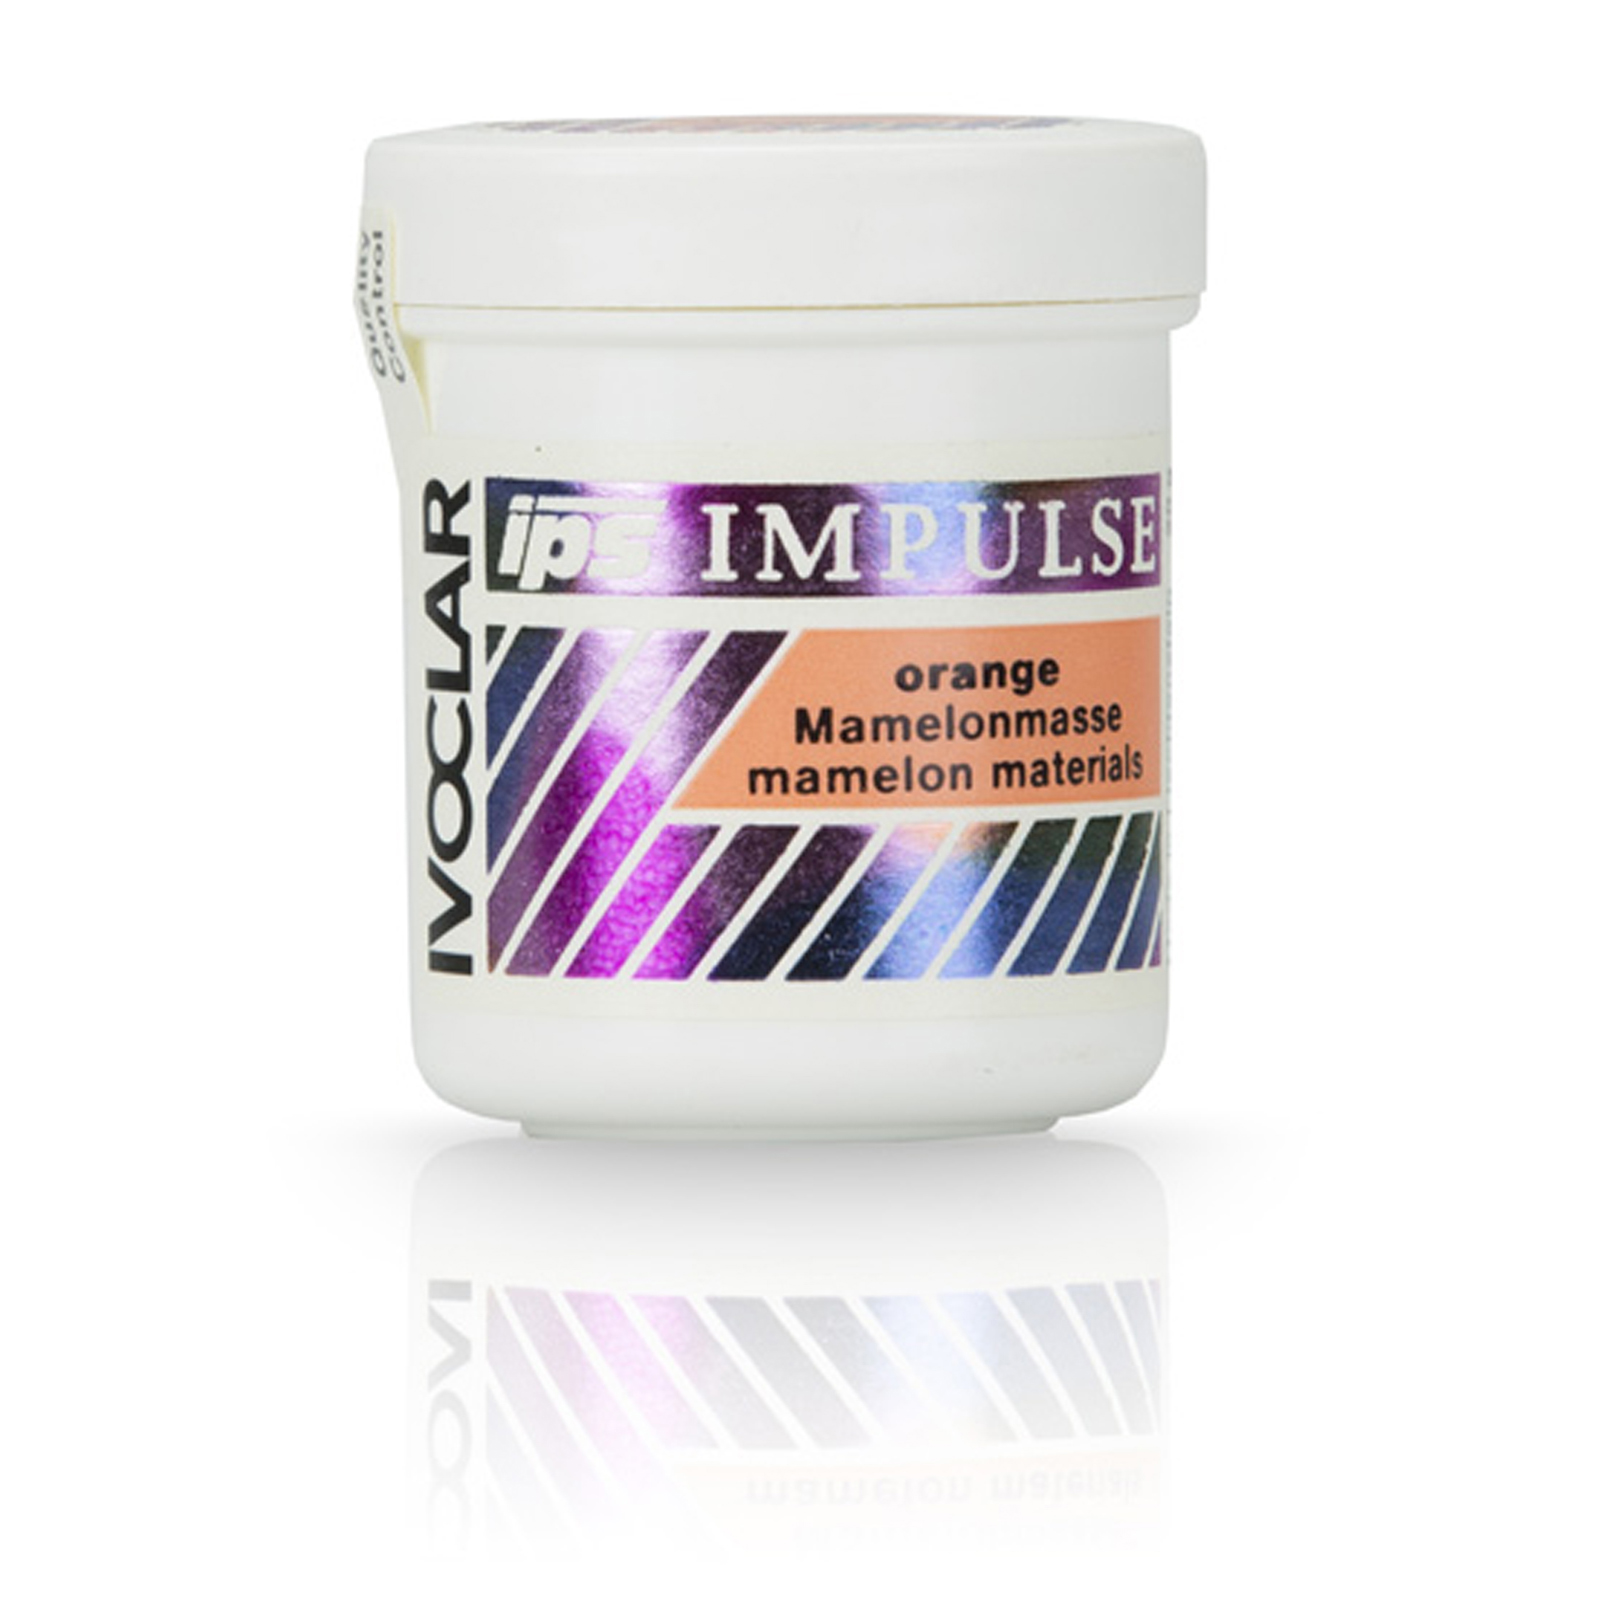 IPS Impulse Mamelon Material 20 g